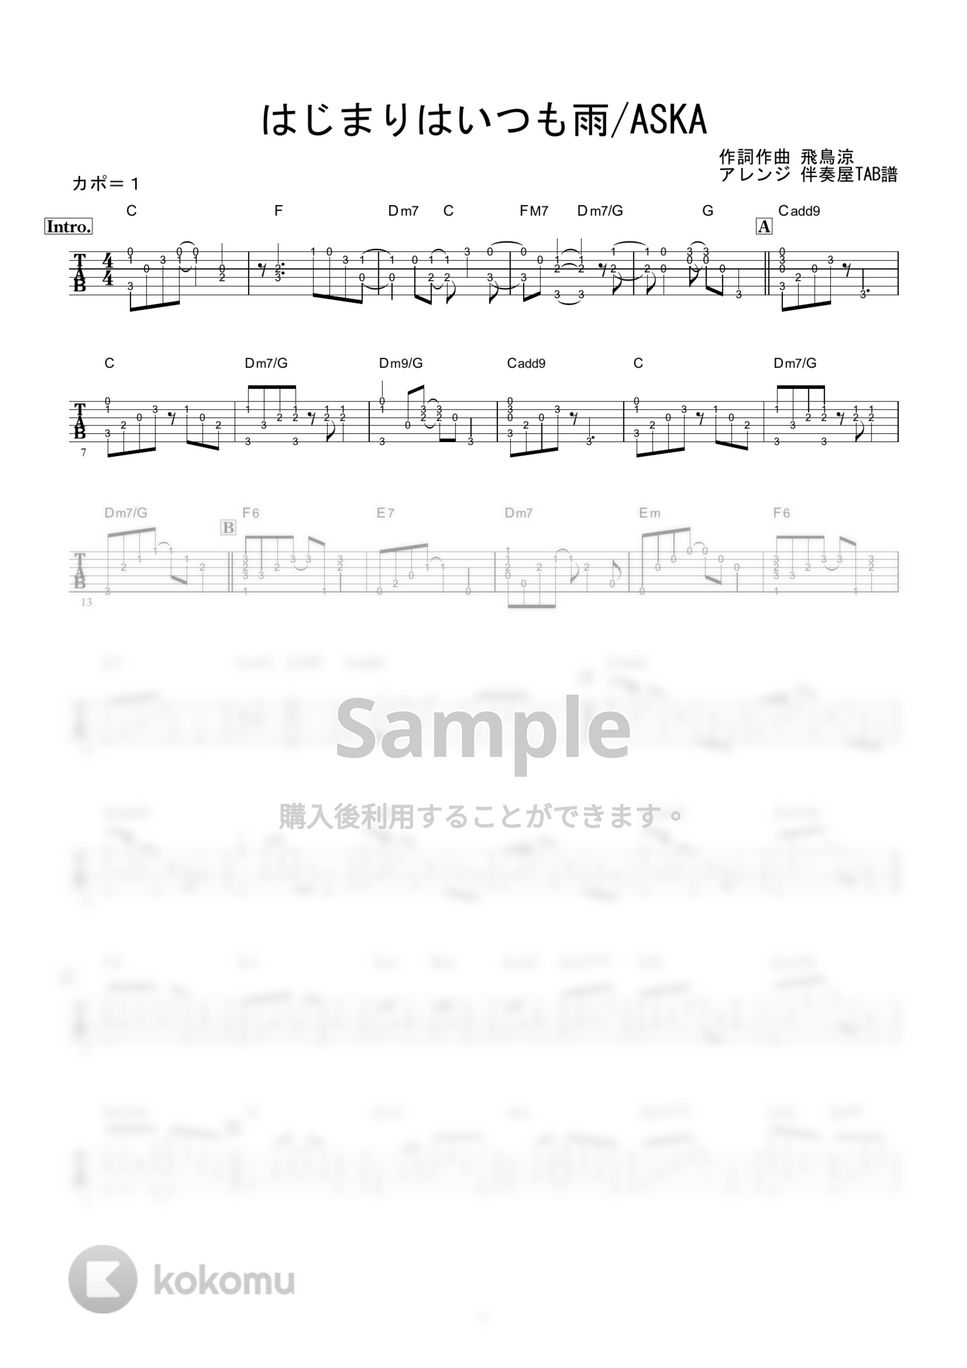 ASKA - はじまりはいつも雨 (ギター伴奏/イントロ・間奏ソロギター) by 伴奏屋TAB譜